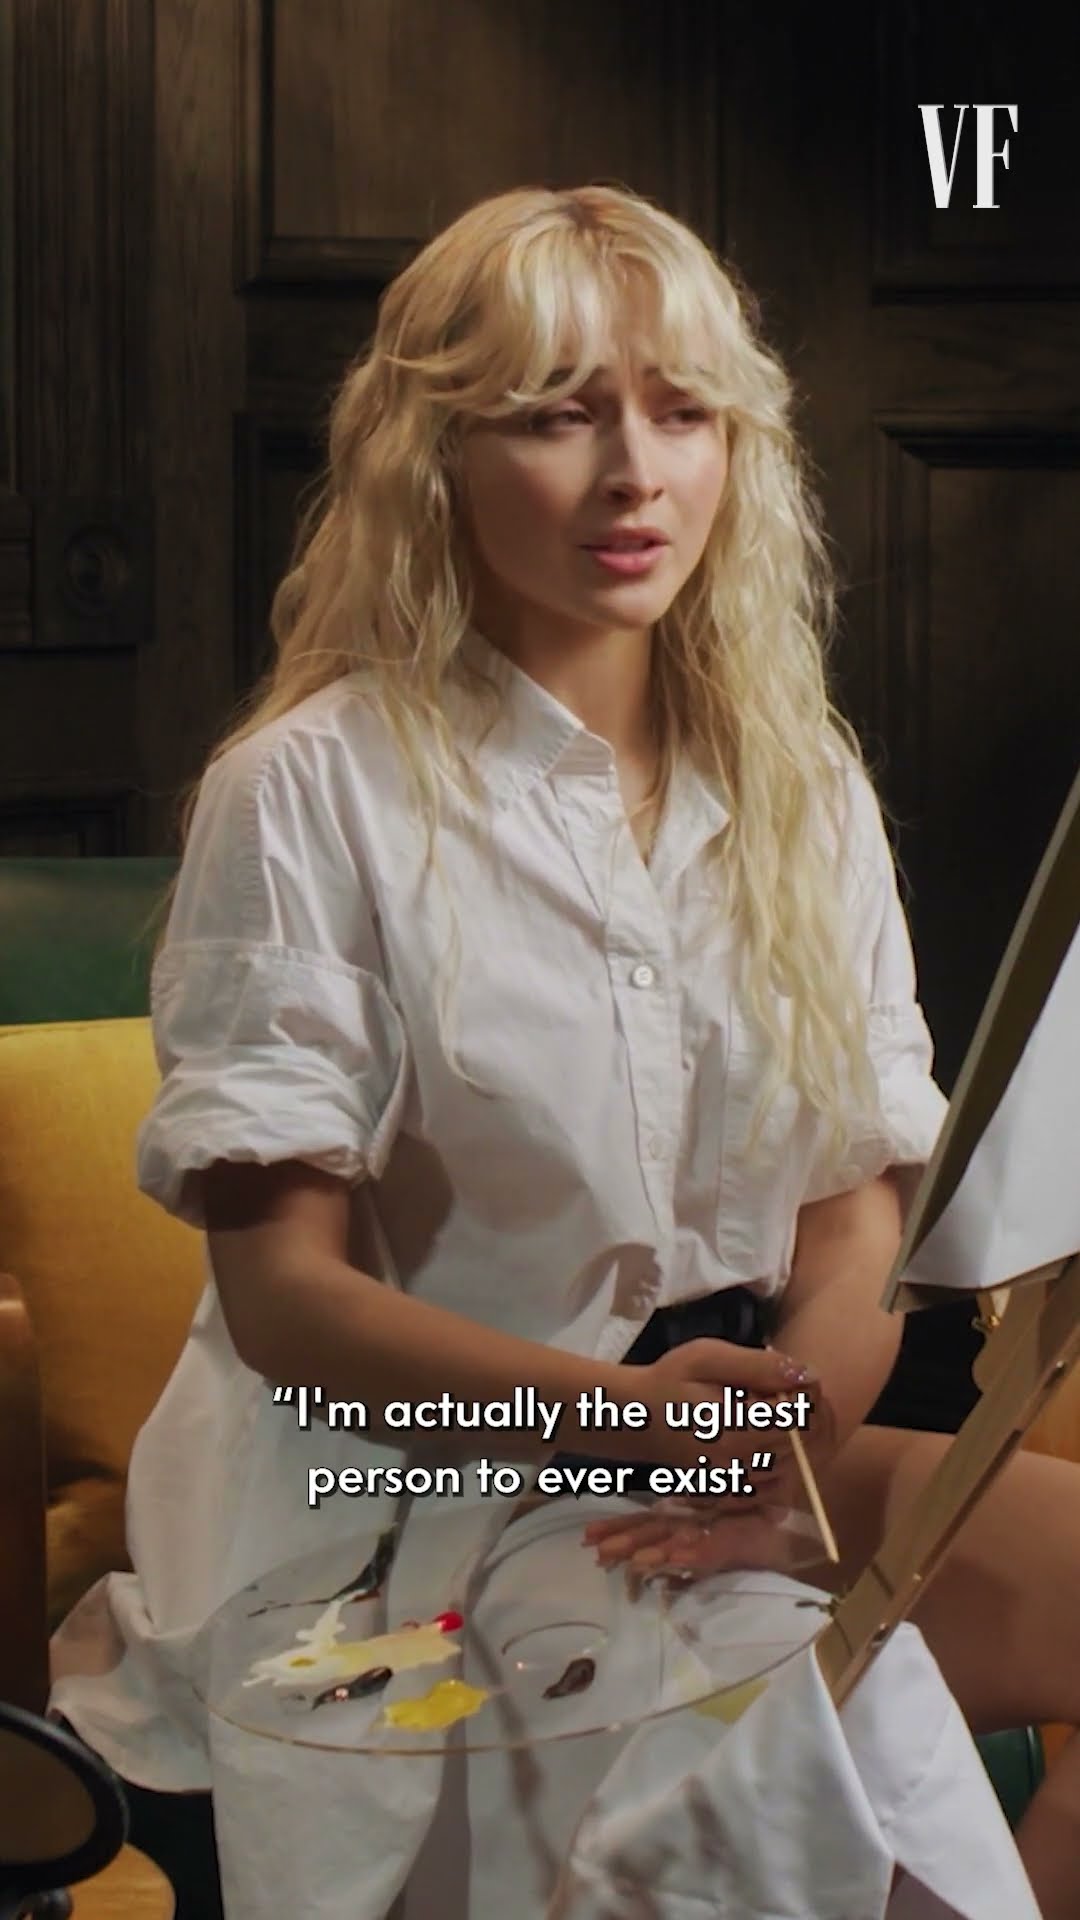 Even Sabrina feels ugly sometimes